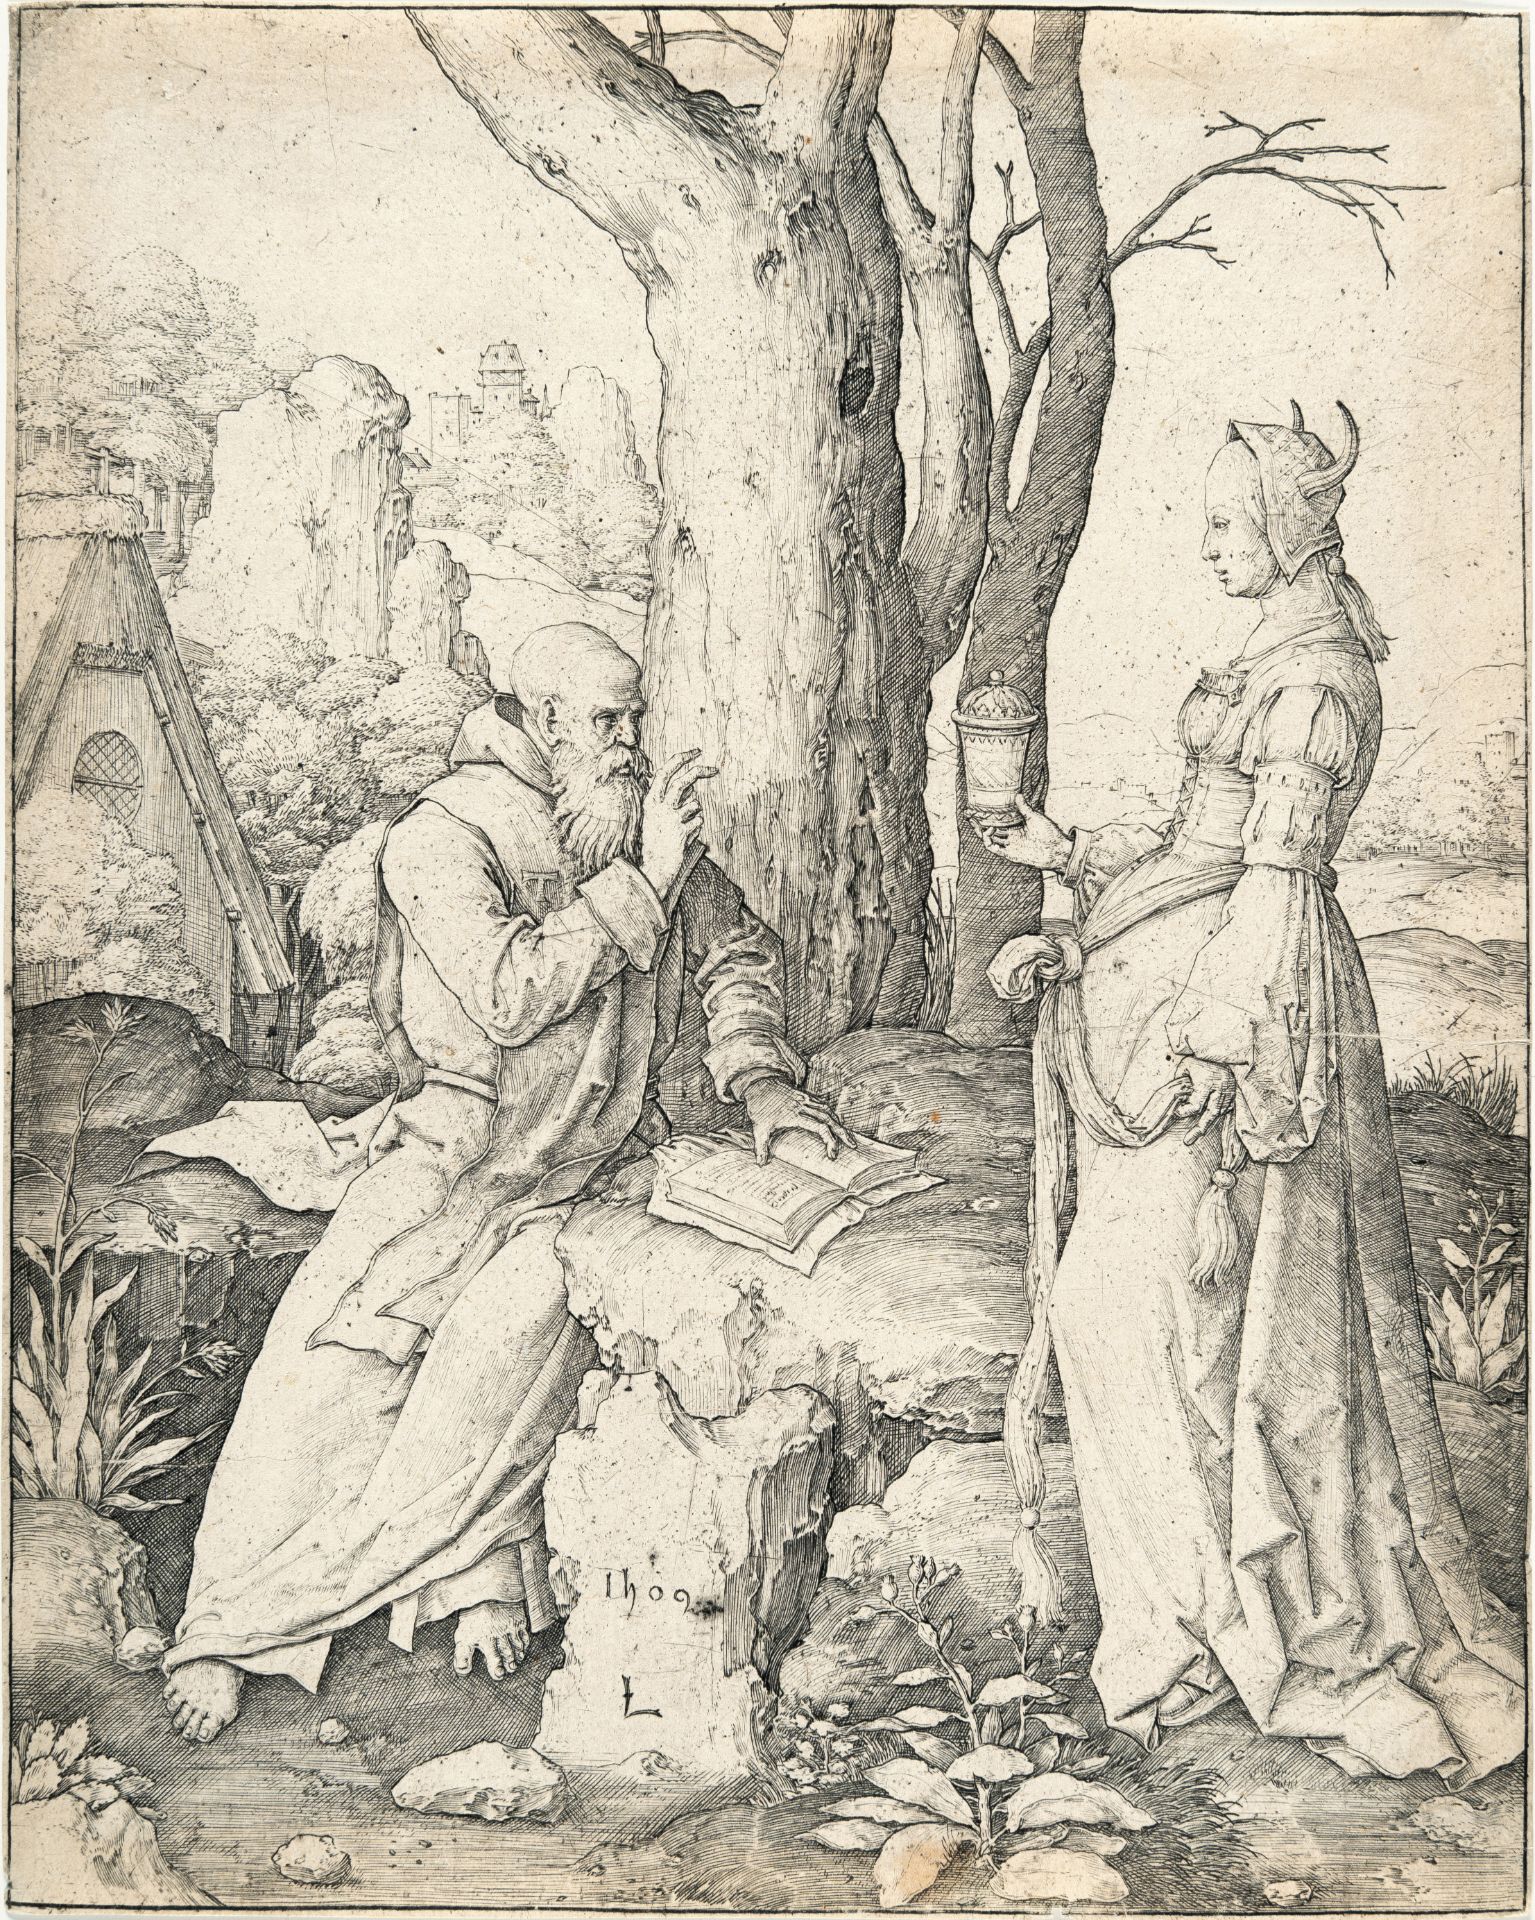 Lucas van Leyden (1494 - Leiden - 1533) – The Temptation of Saint Anthony